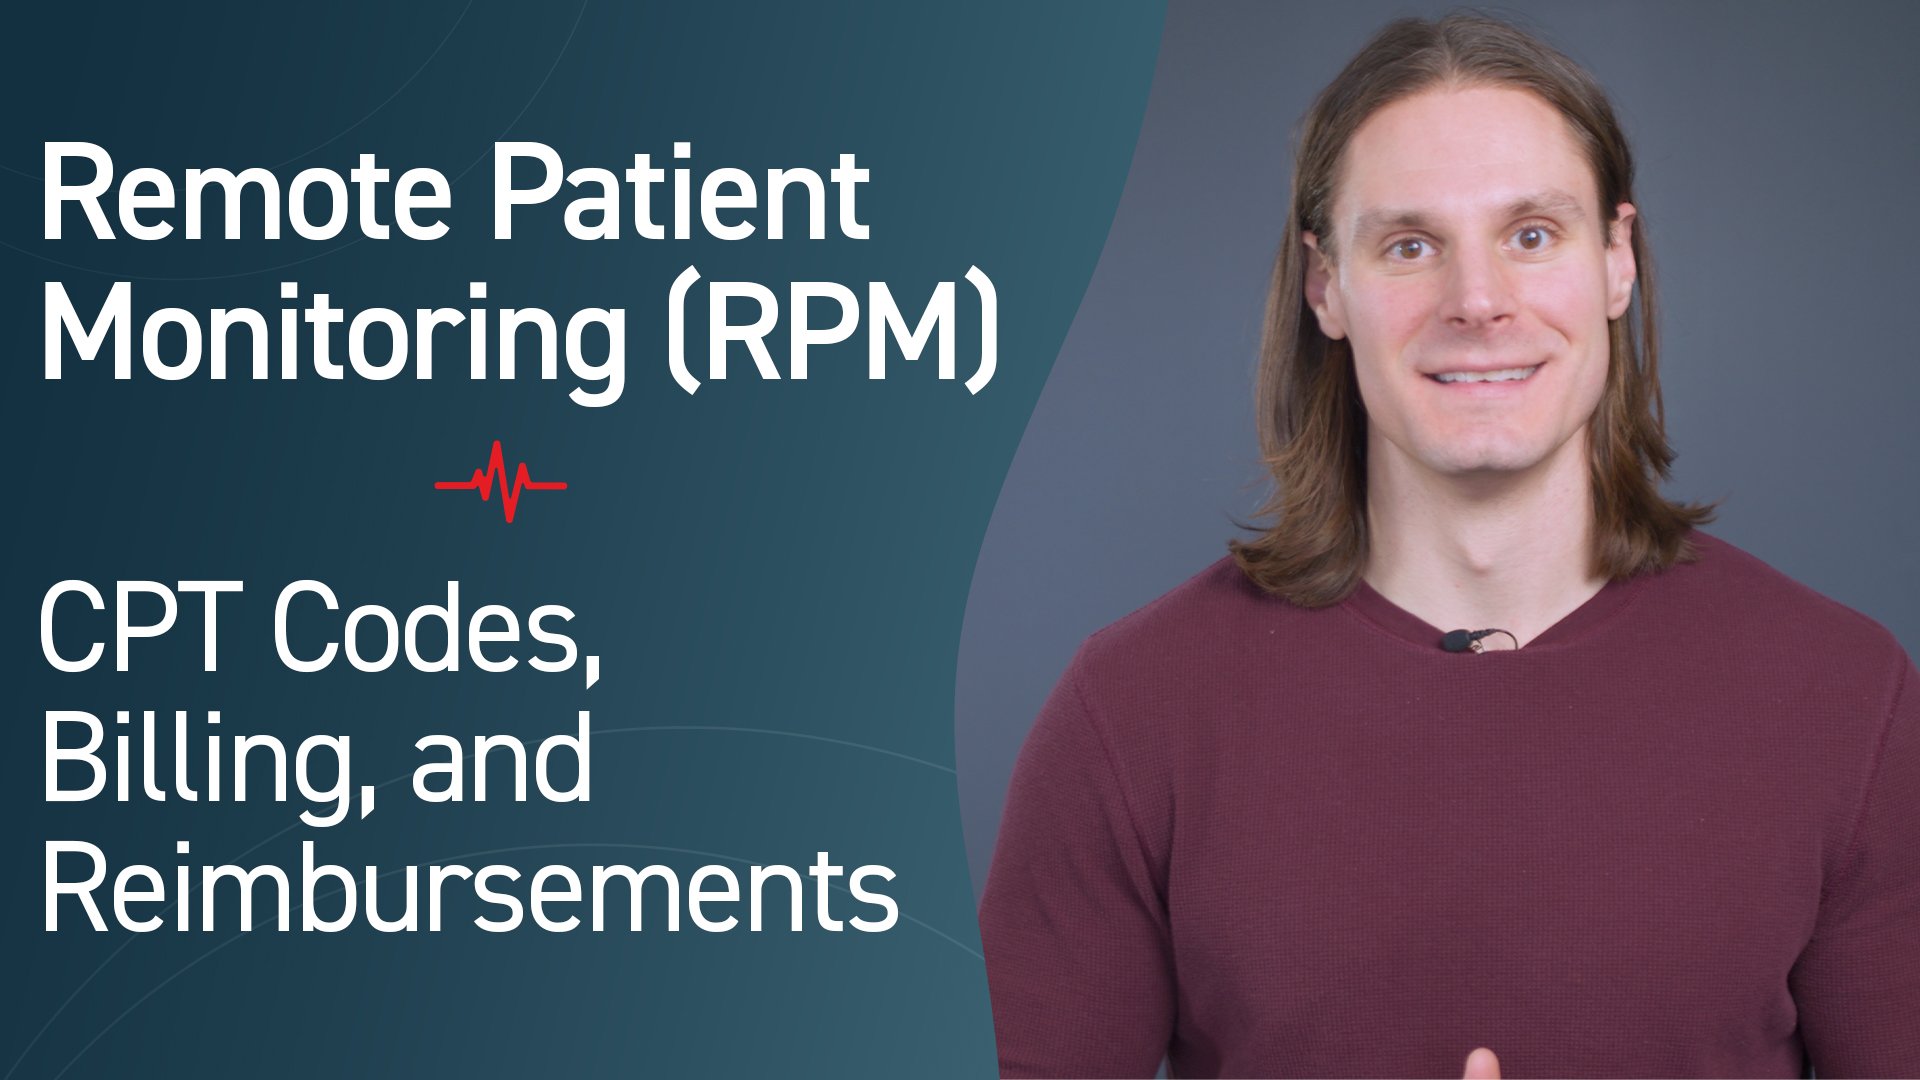 Remote Patient Monitoring (RPM): CPT Codes, Billing, Reimbursements